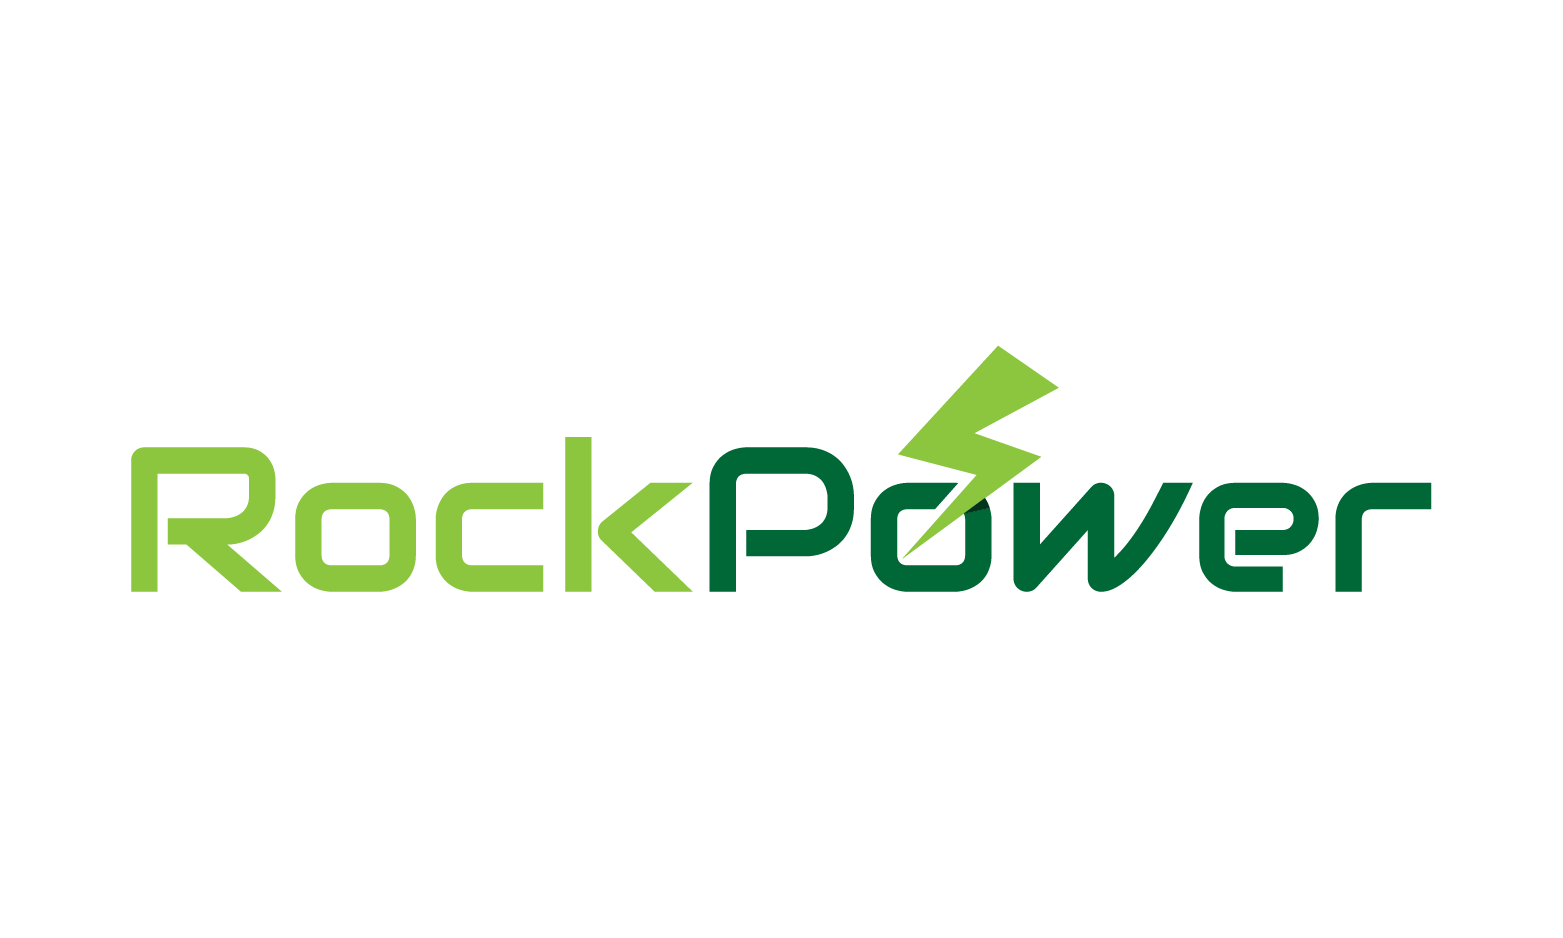 RockPower.com - Creative brandable domain for sale